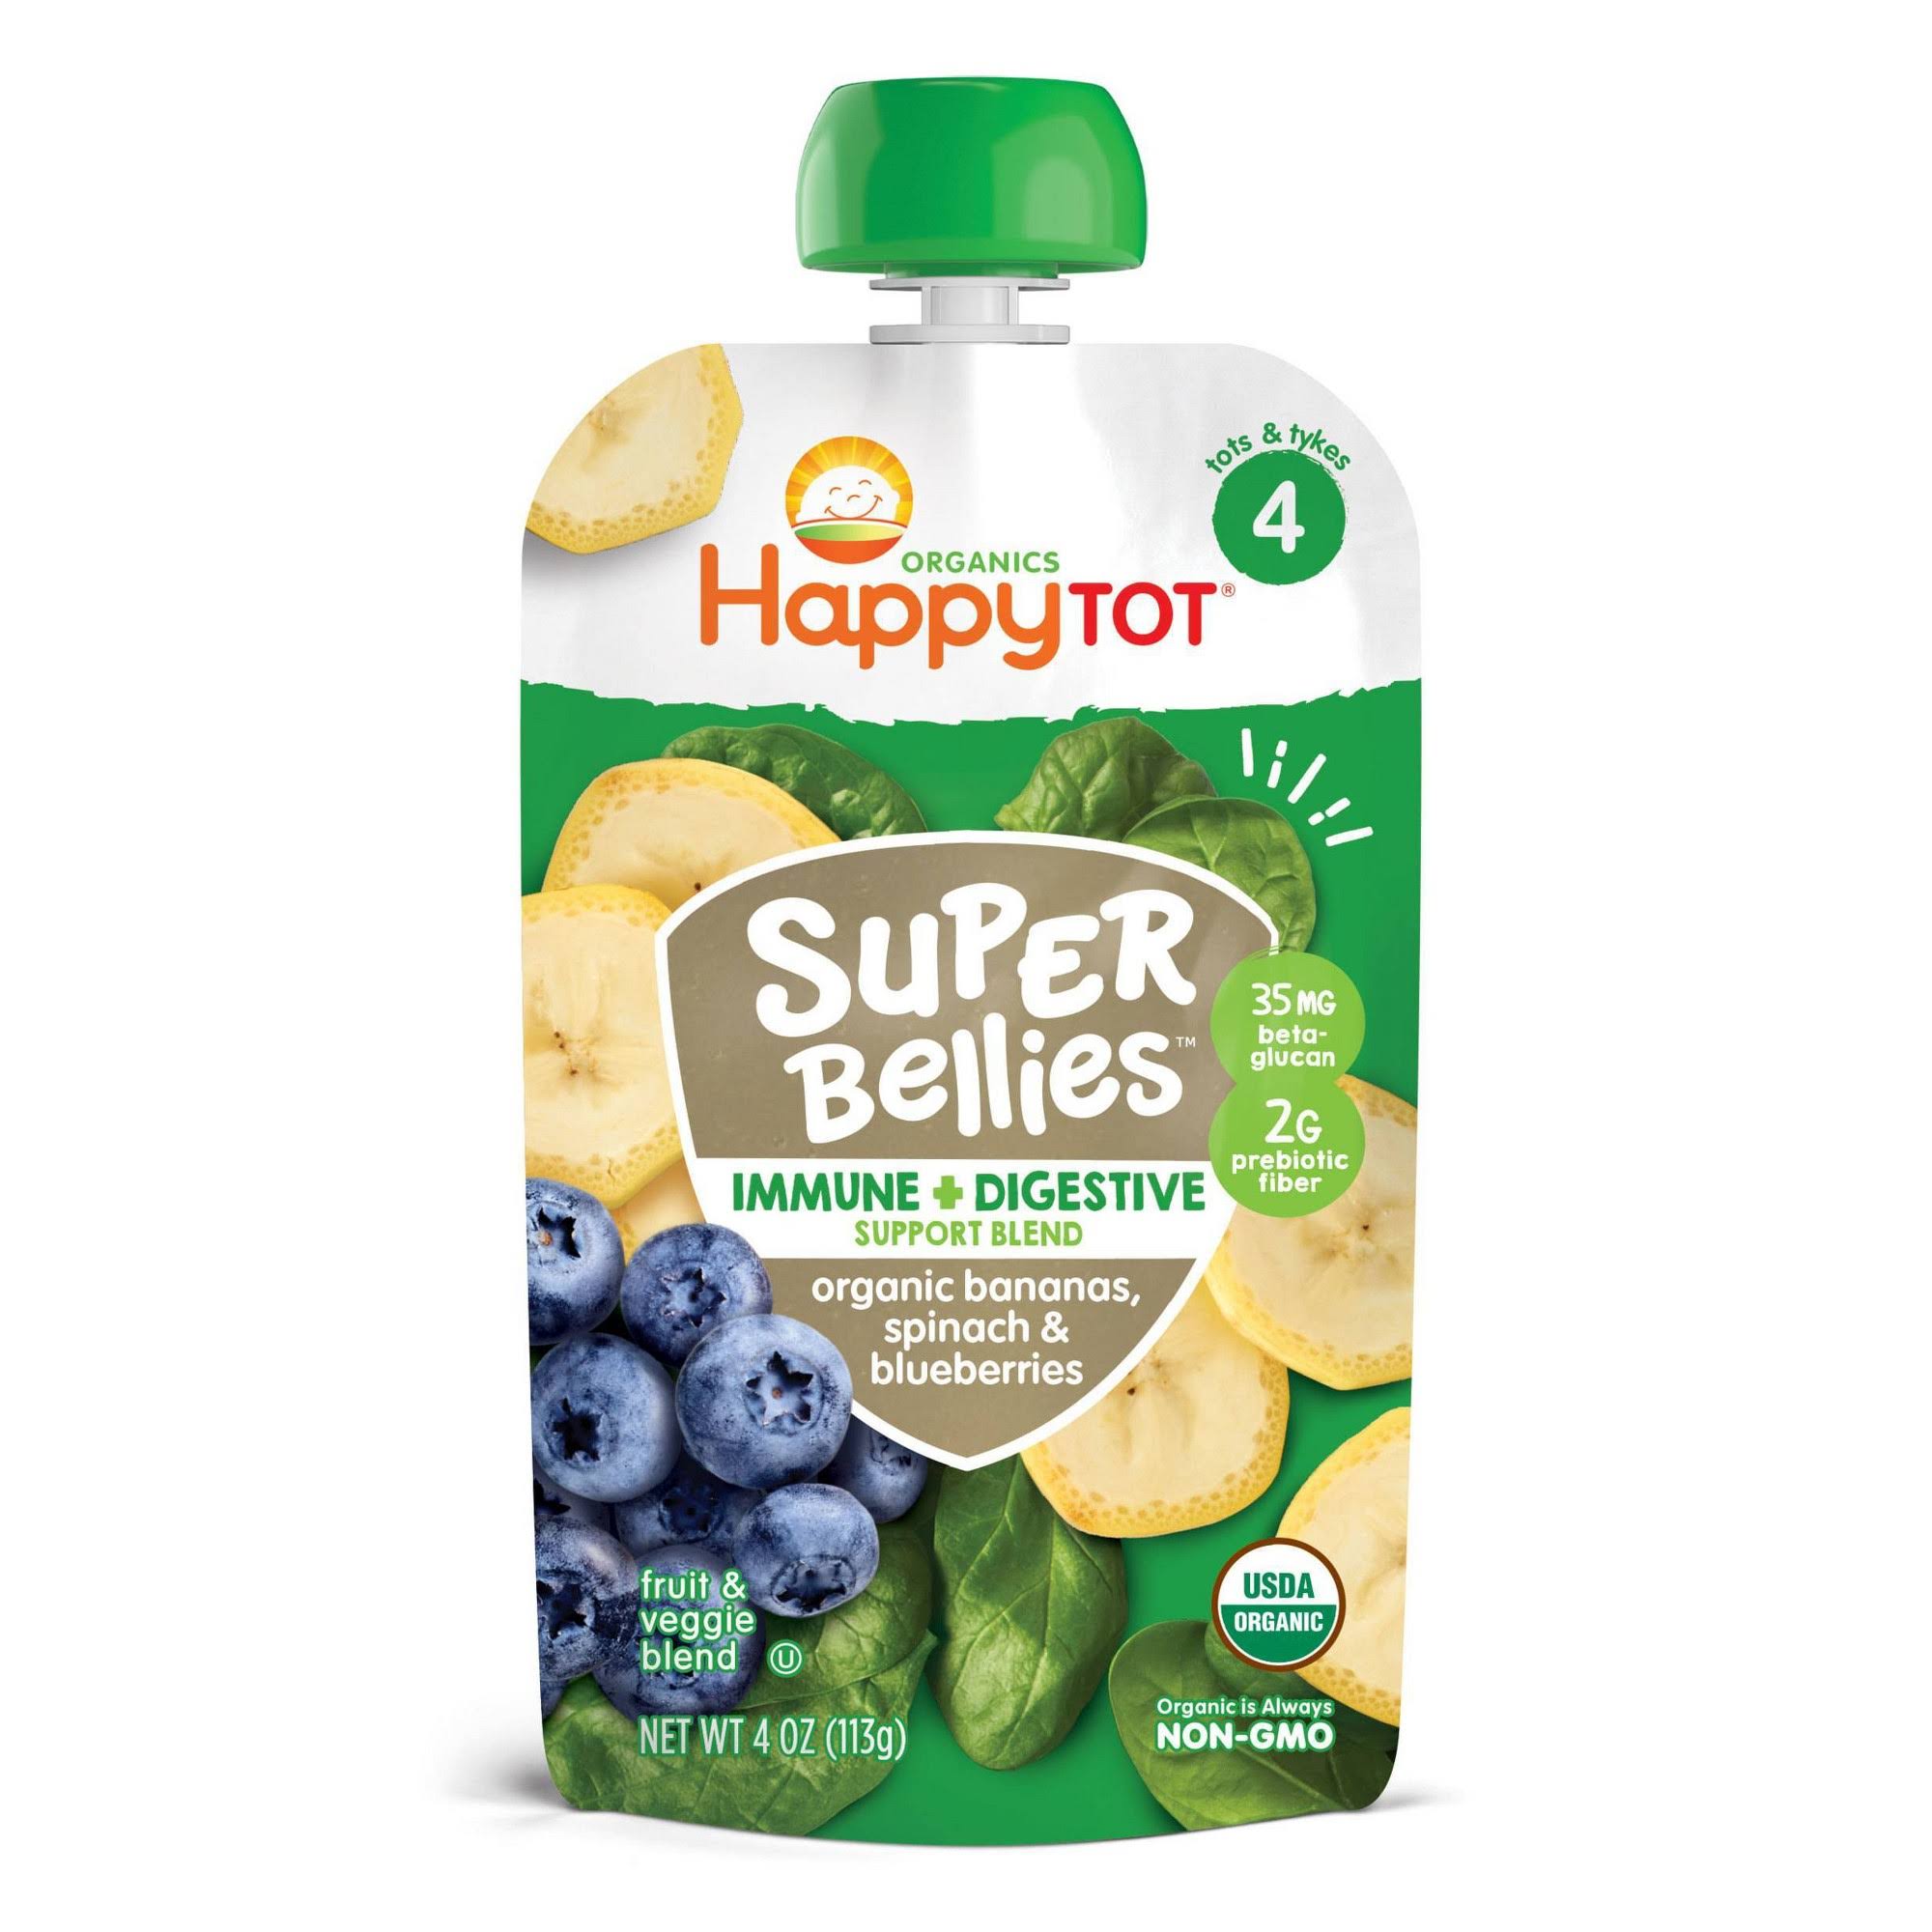 Happytot Organics Super Bellies Fruit & Veggie Blend, Bananas, Spinach & Blueberries, 4 Tots & Tykes - 4 oz